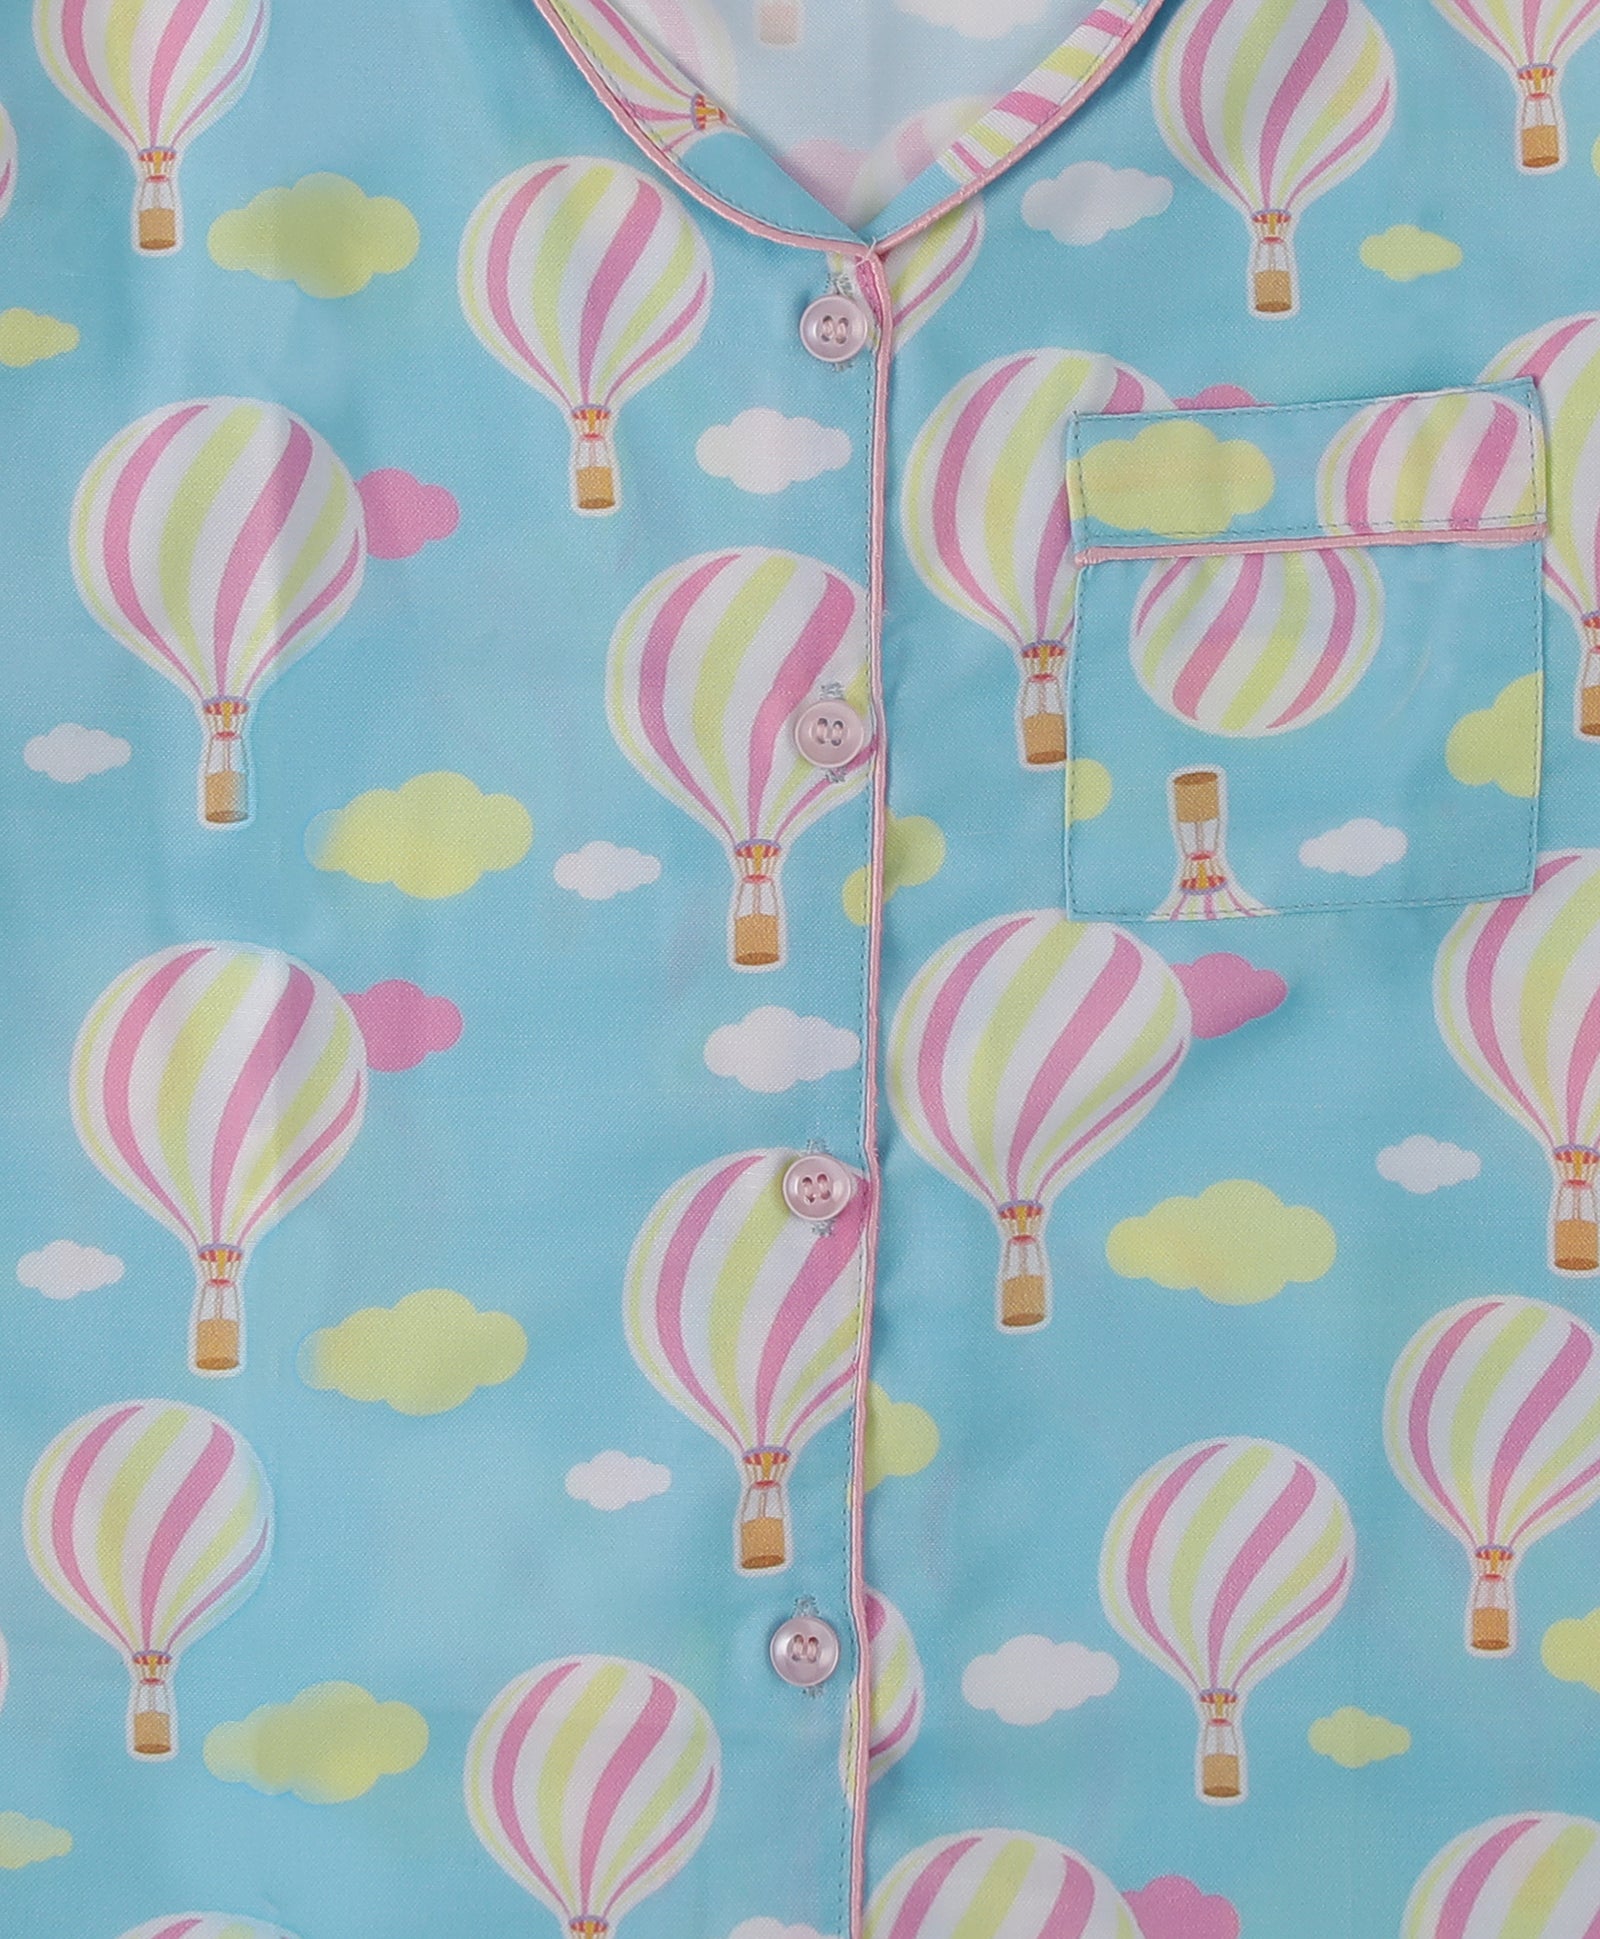 Hot Air Balloon Kids Pj Set - Cotton Rayon Pj Set with Notched Collar